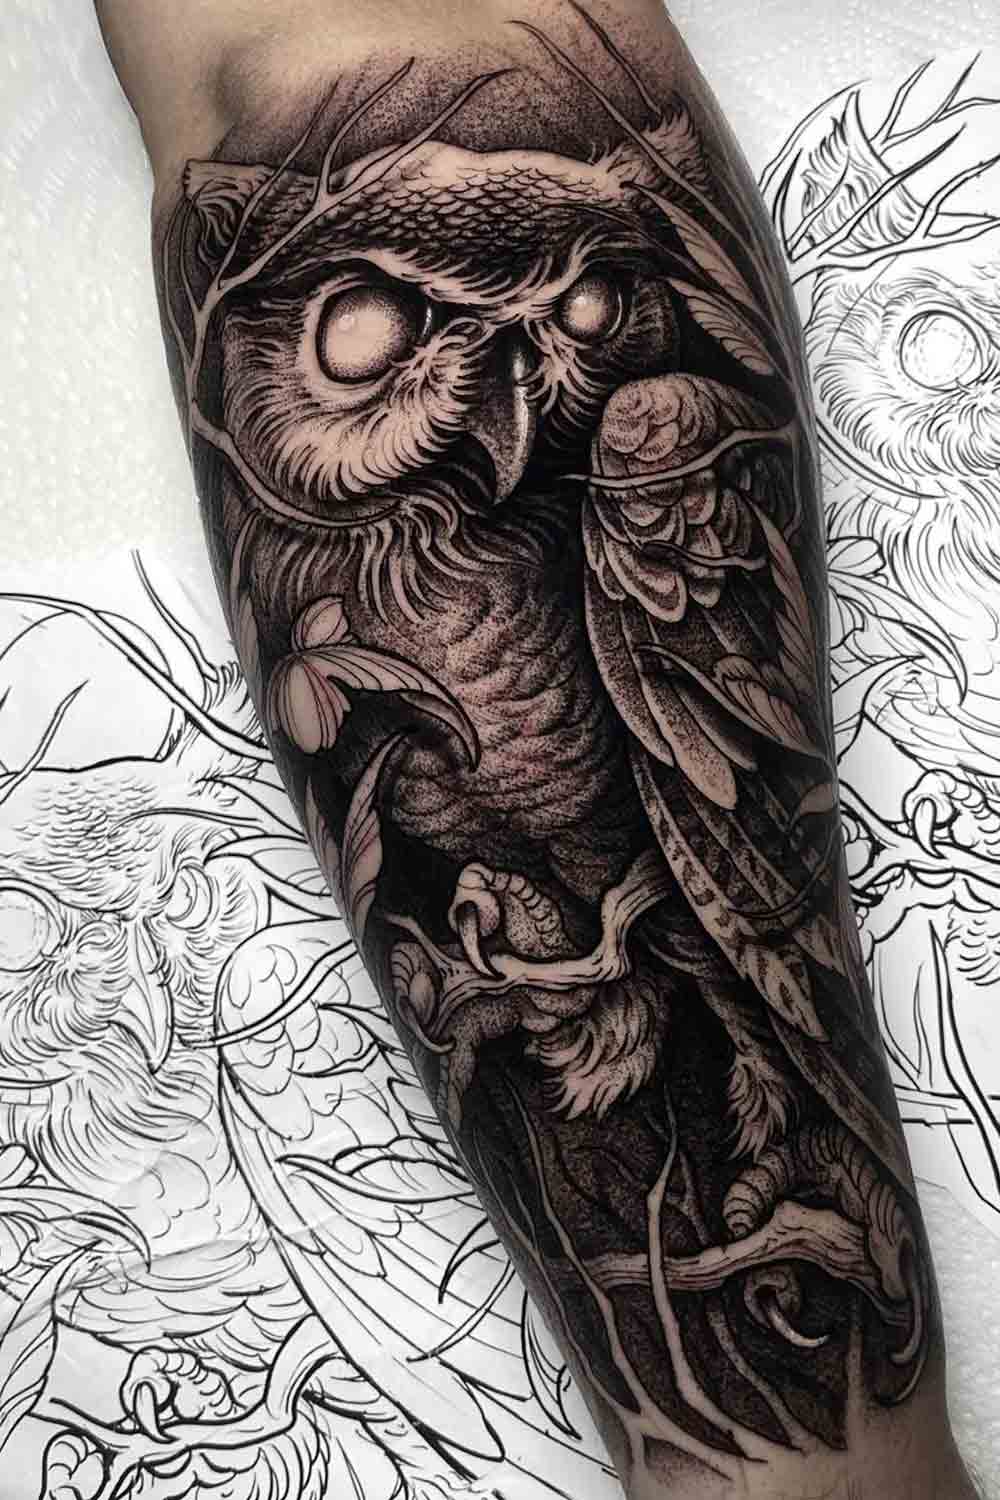 Dark Owl Tattoo Design on Arm